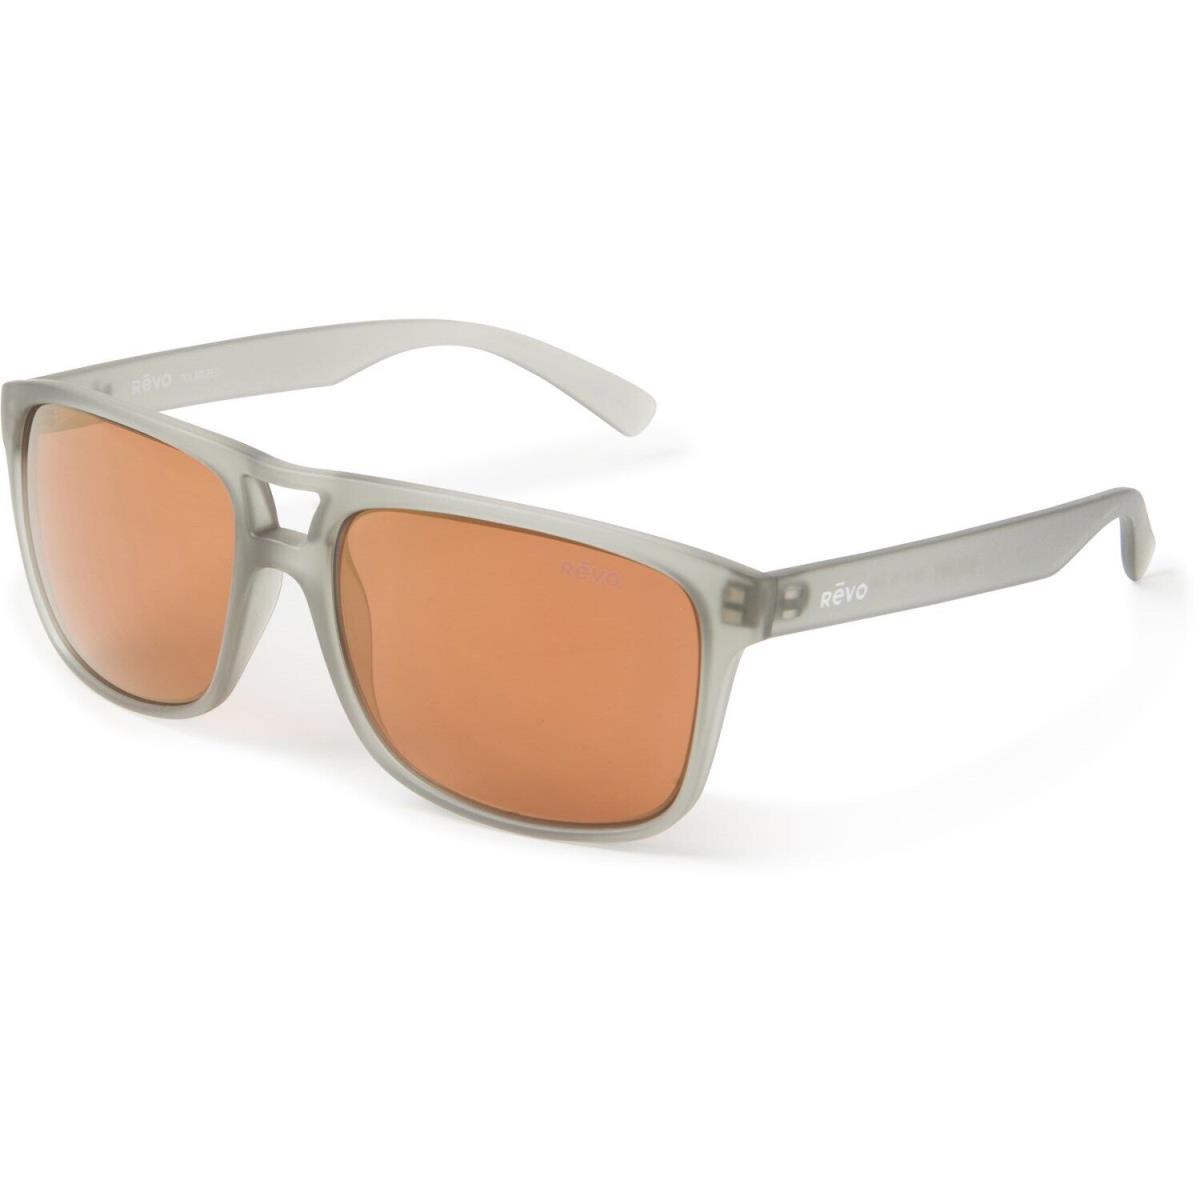 Revo Holsby Polarized Sunglasses - RE 1019 - Multicolor Frame